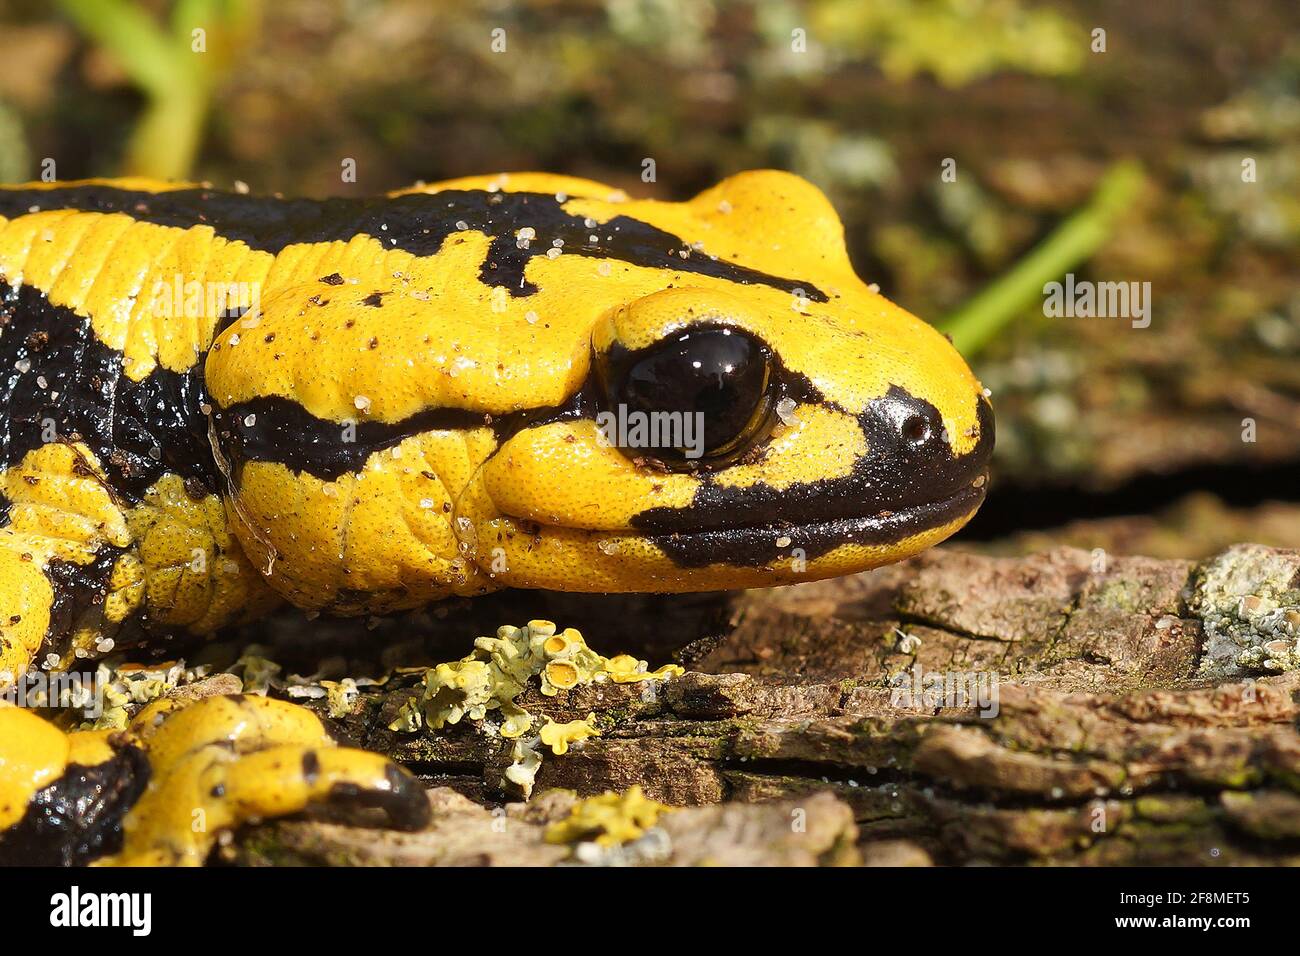 Headshot of the yellow-colored salamander (Salamandra bernardezi) in the natural background Stock Photo